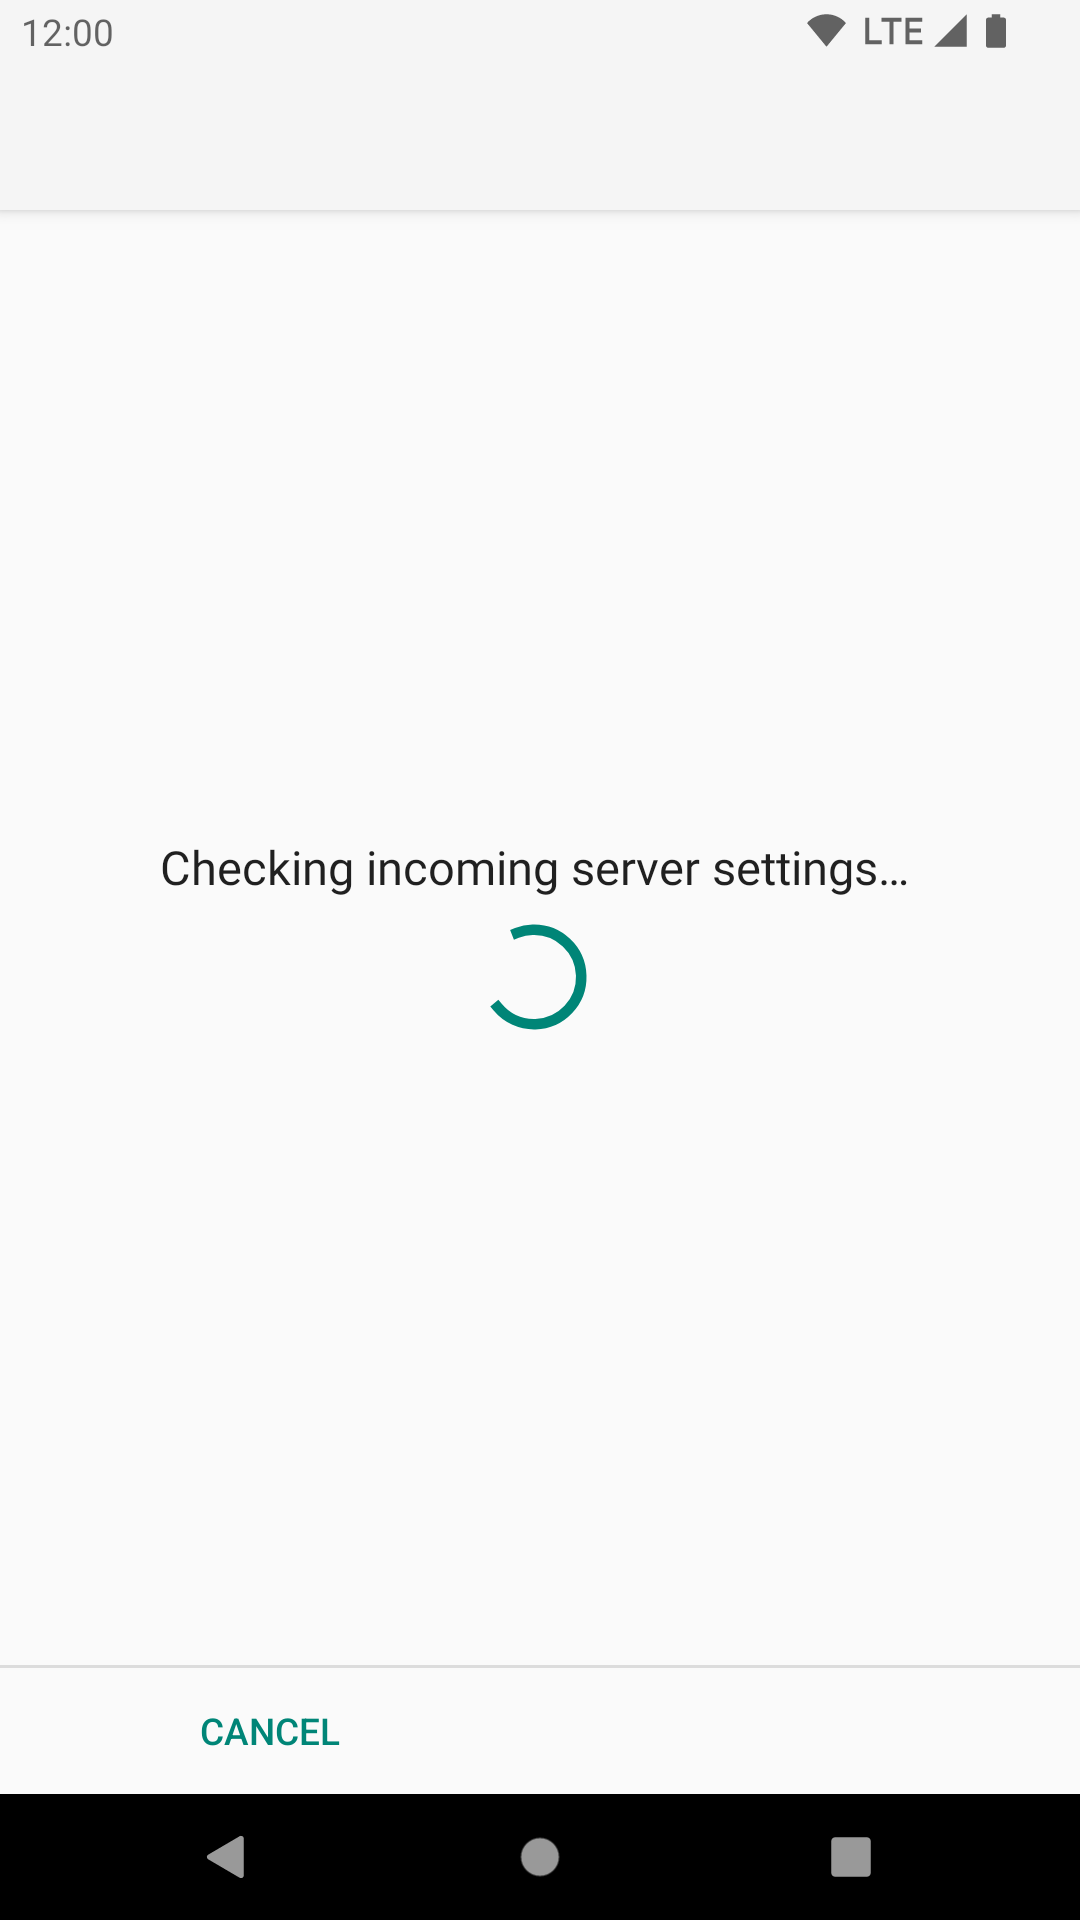 Checking incoming server settings